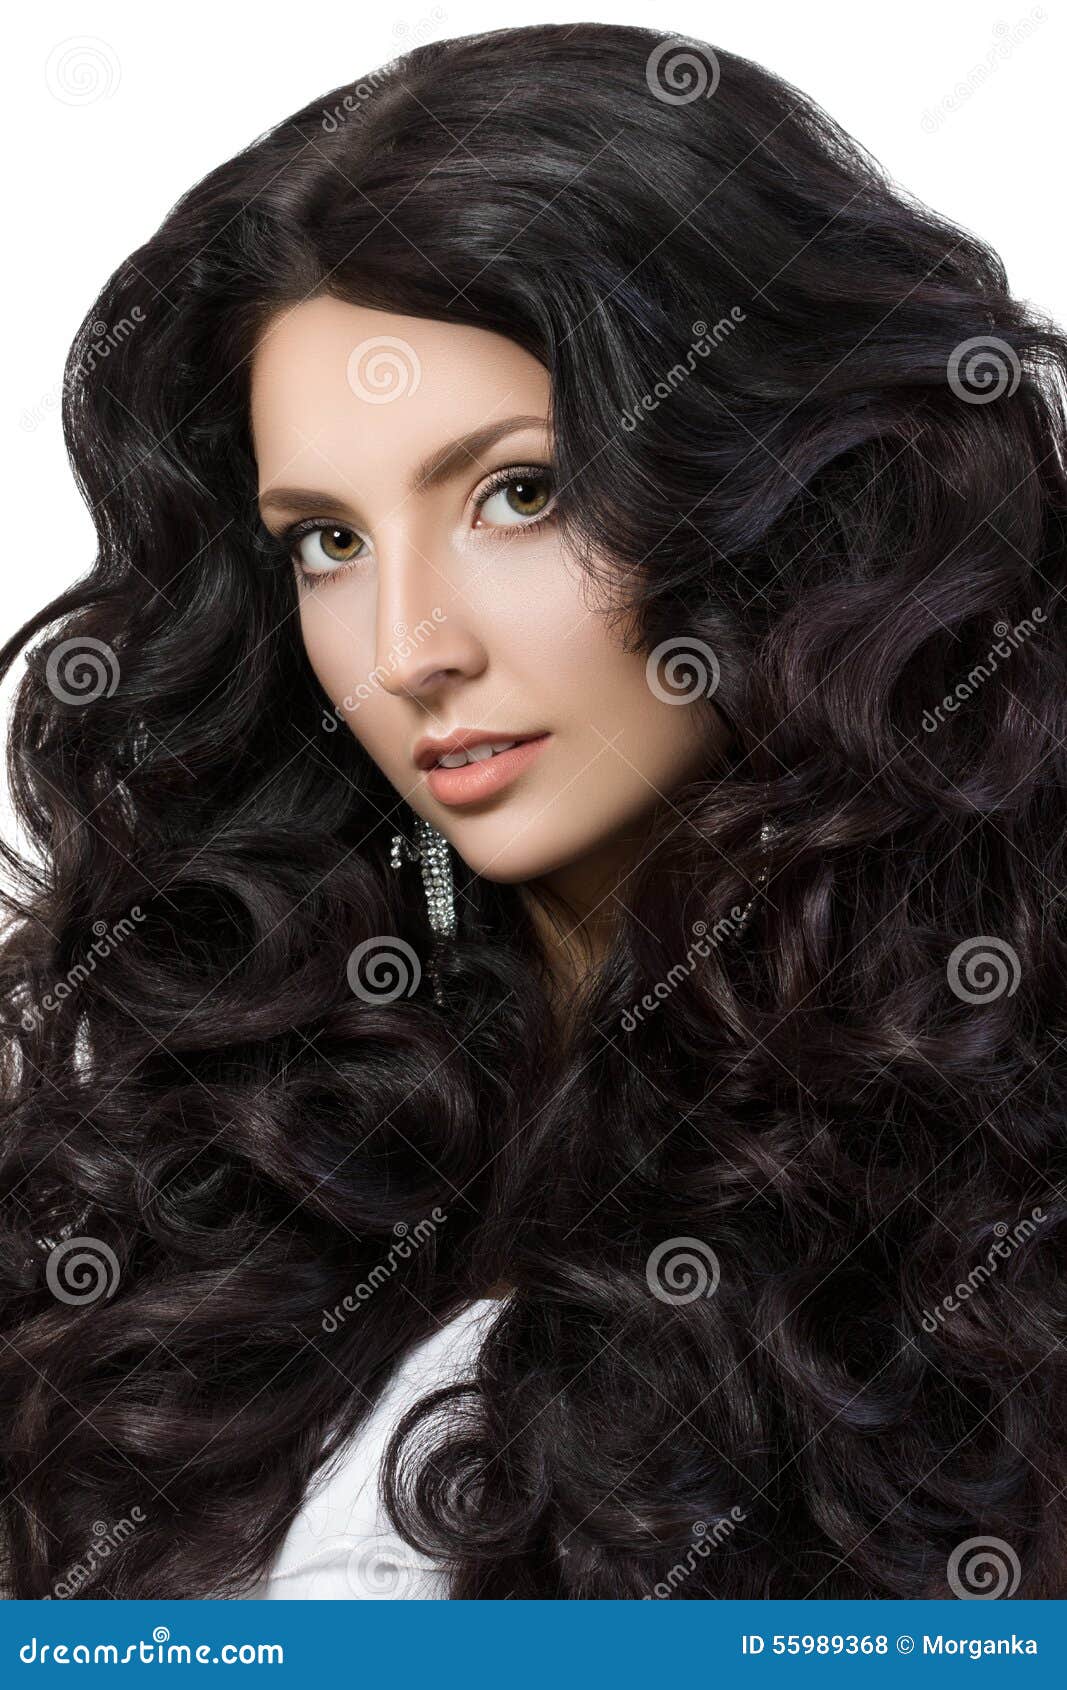 cherry mae ubaldo add photo pretty black haired woman